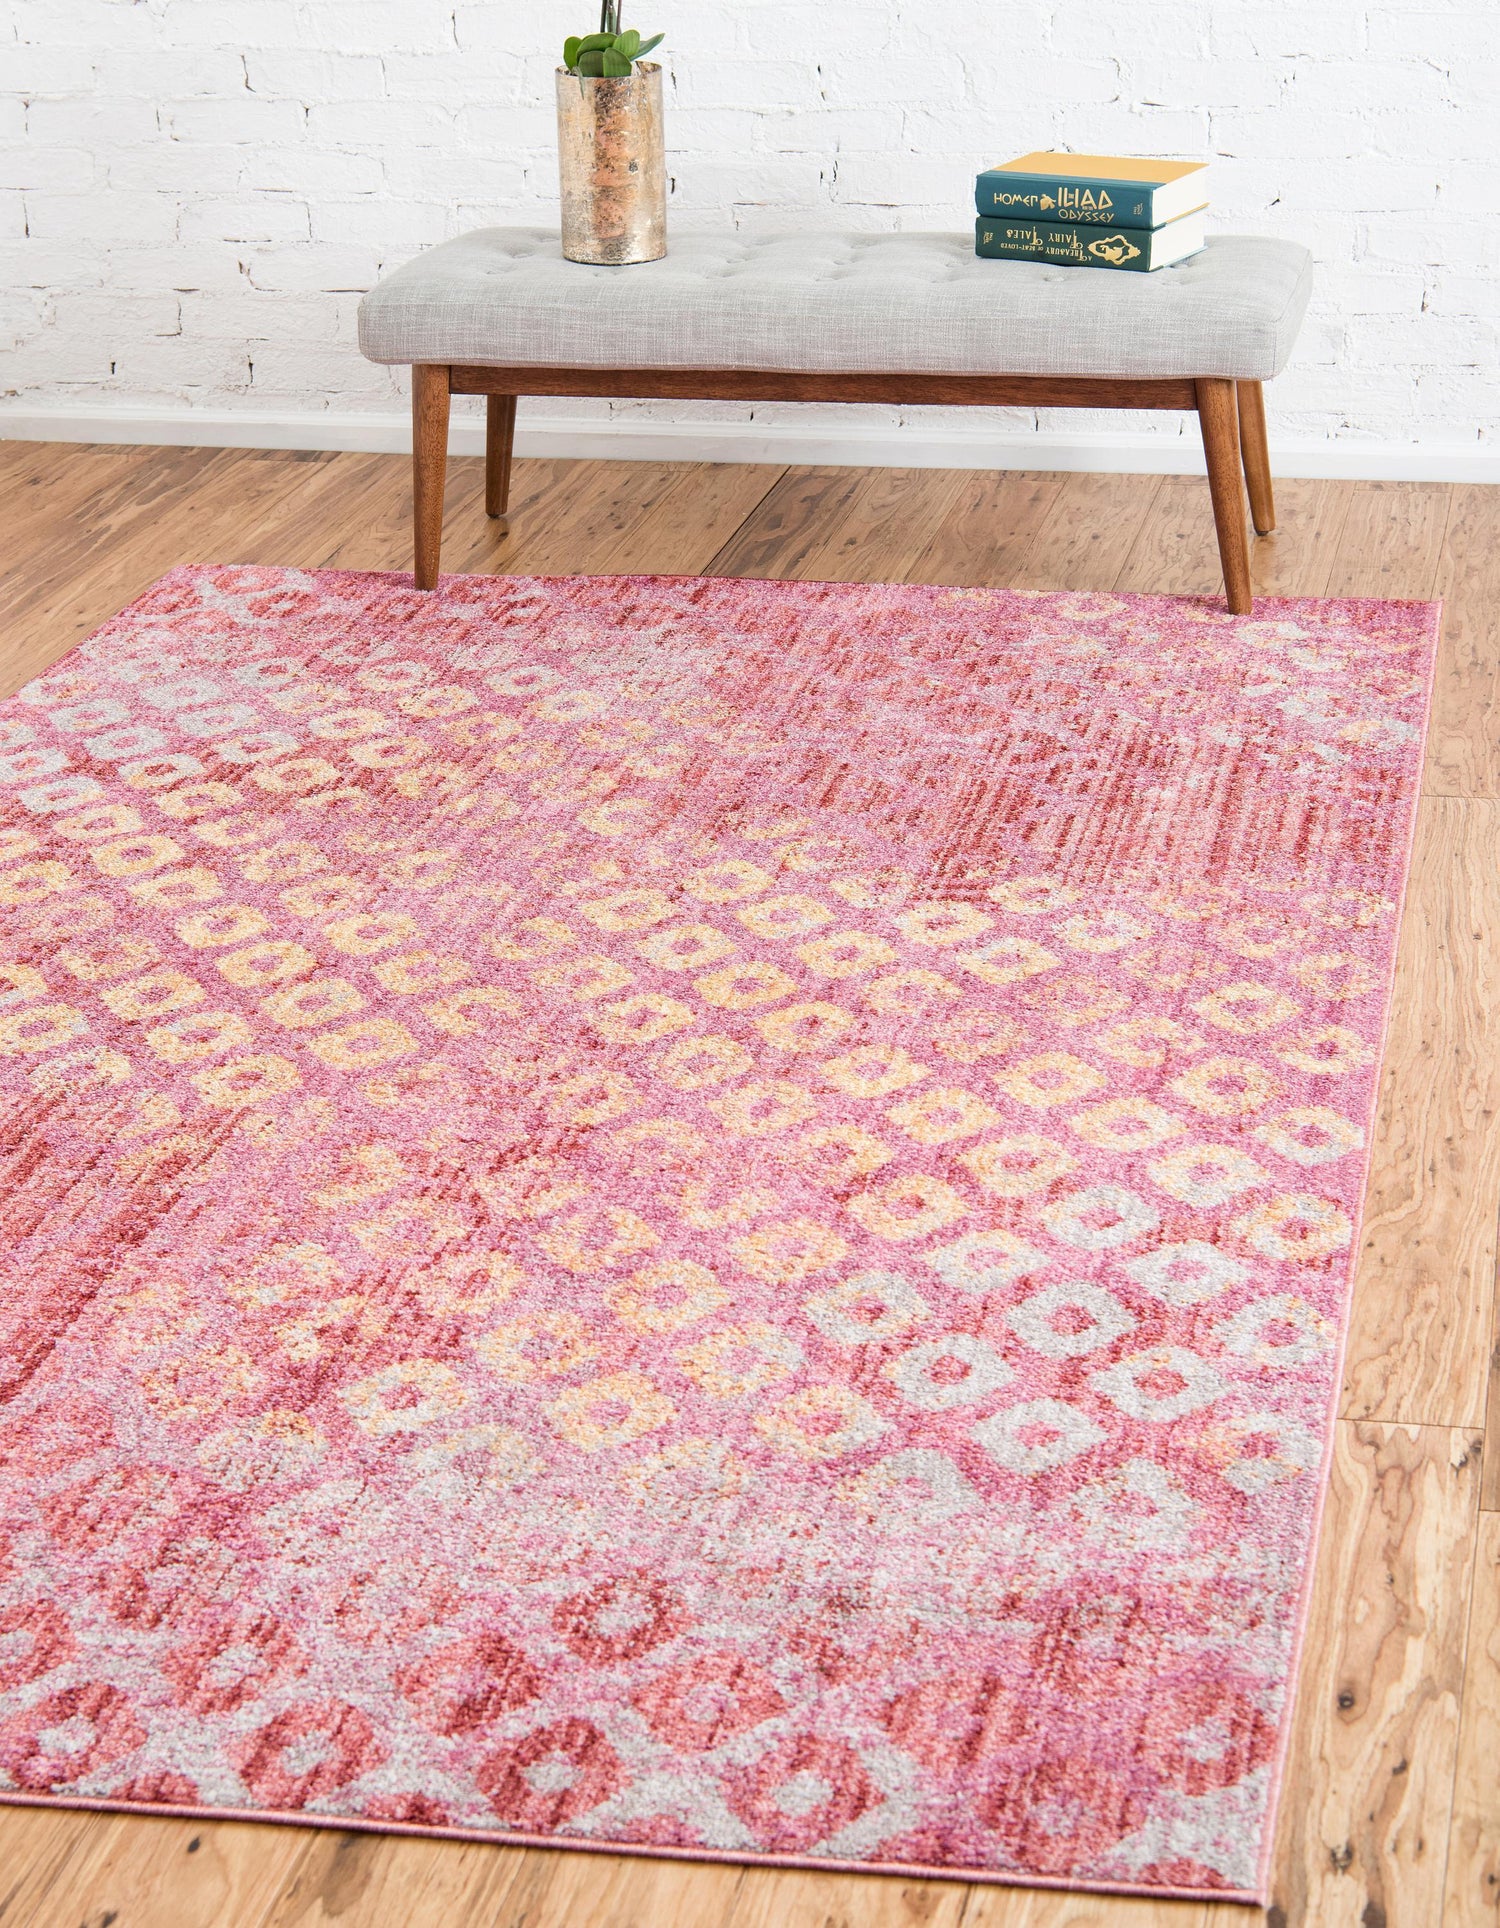 Devan - Rainbow Square Pattern Rug - Nordic Side - abstract-rug, Area-rug, bath-mat, bath-rug, door-mat, feed-cl0-over-80-dollars, geometric-rug, hallway-runner, kitchen-mat, kitchen-rug, lar